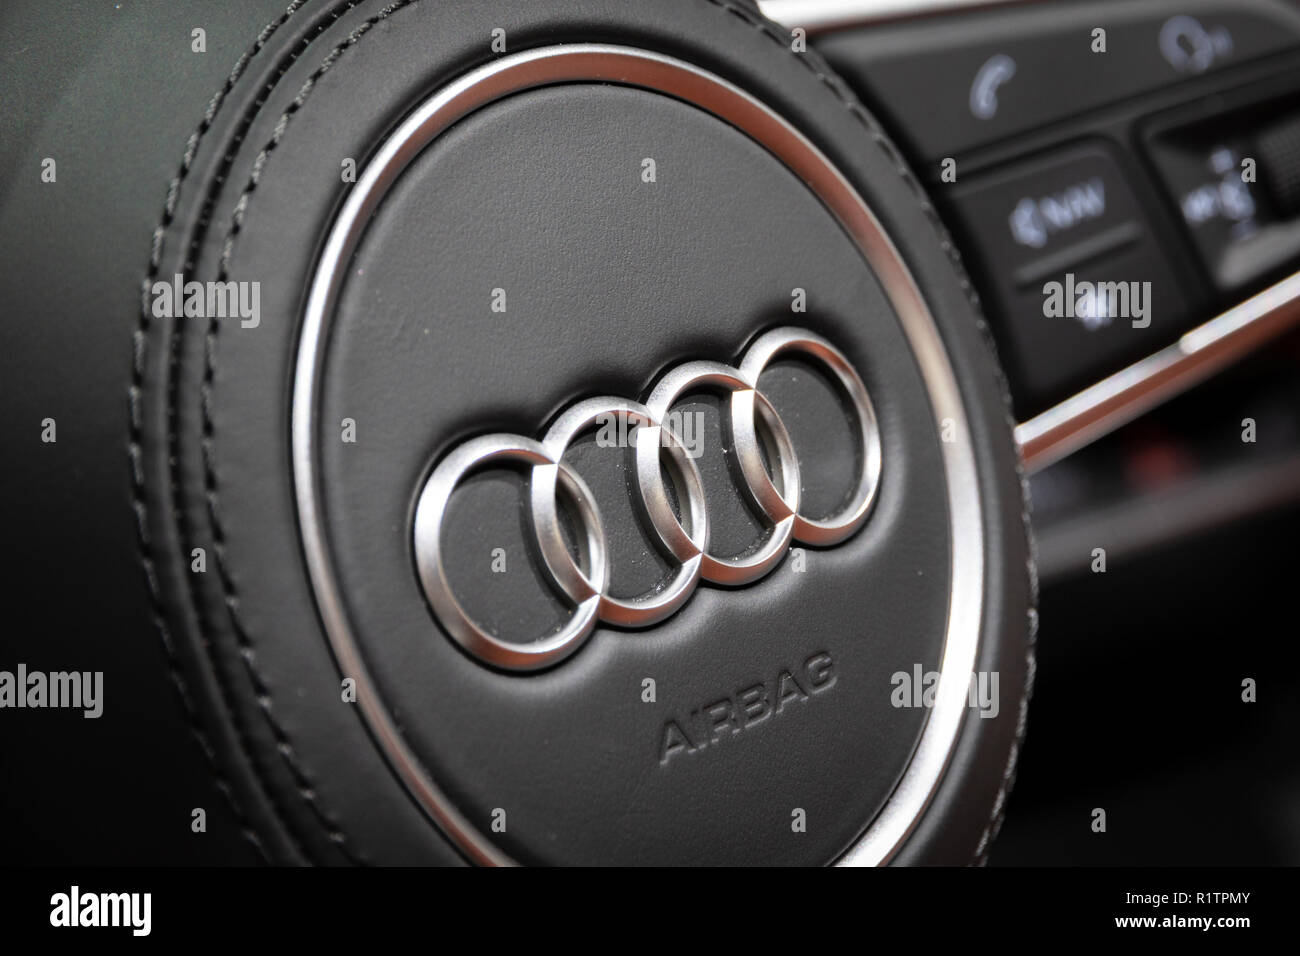 Audi car symbol hi-res stock photography and images - Alamy